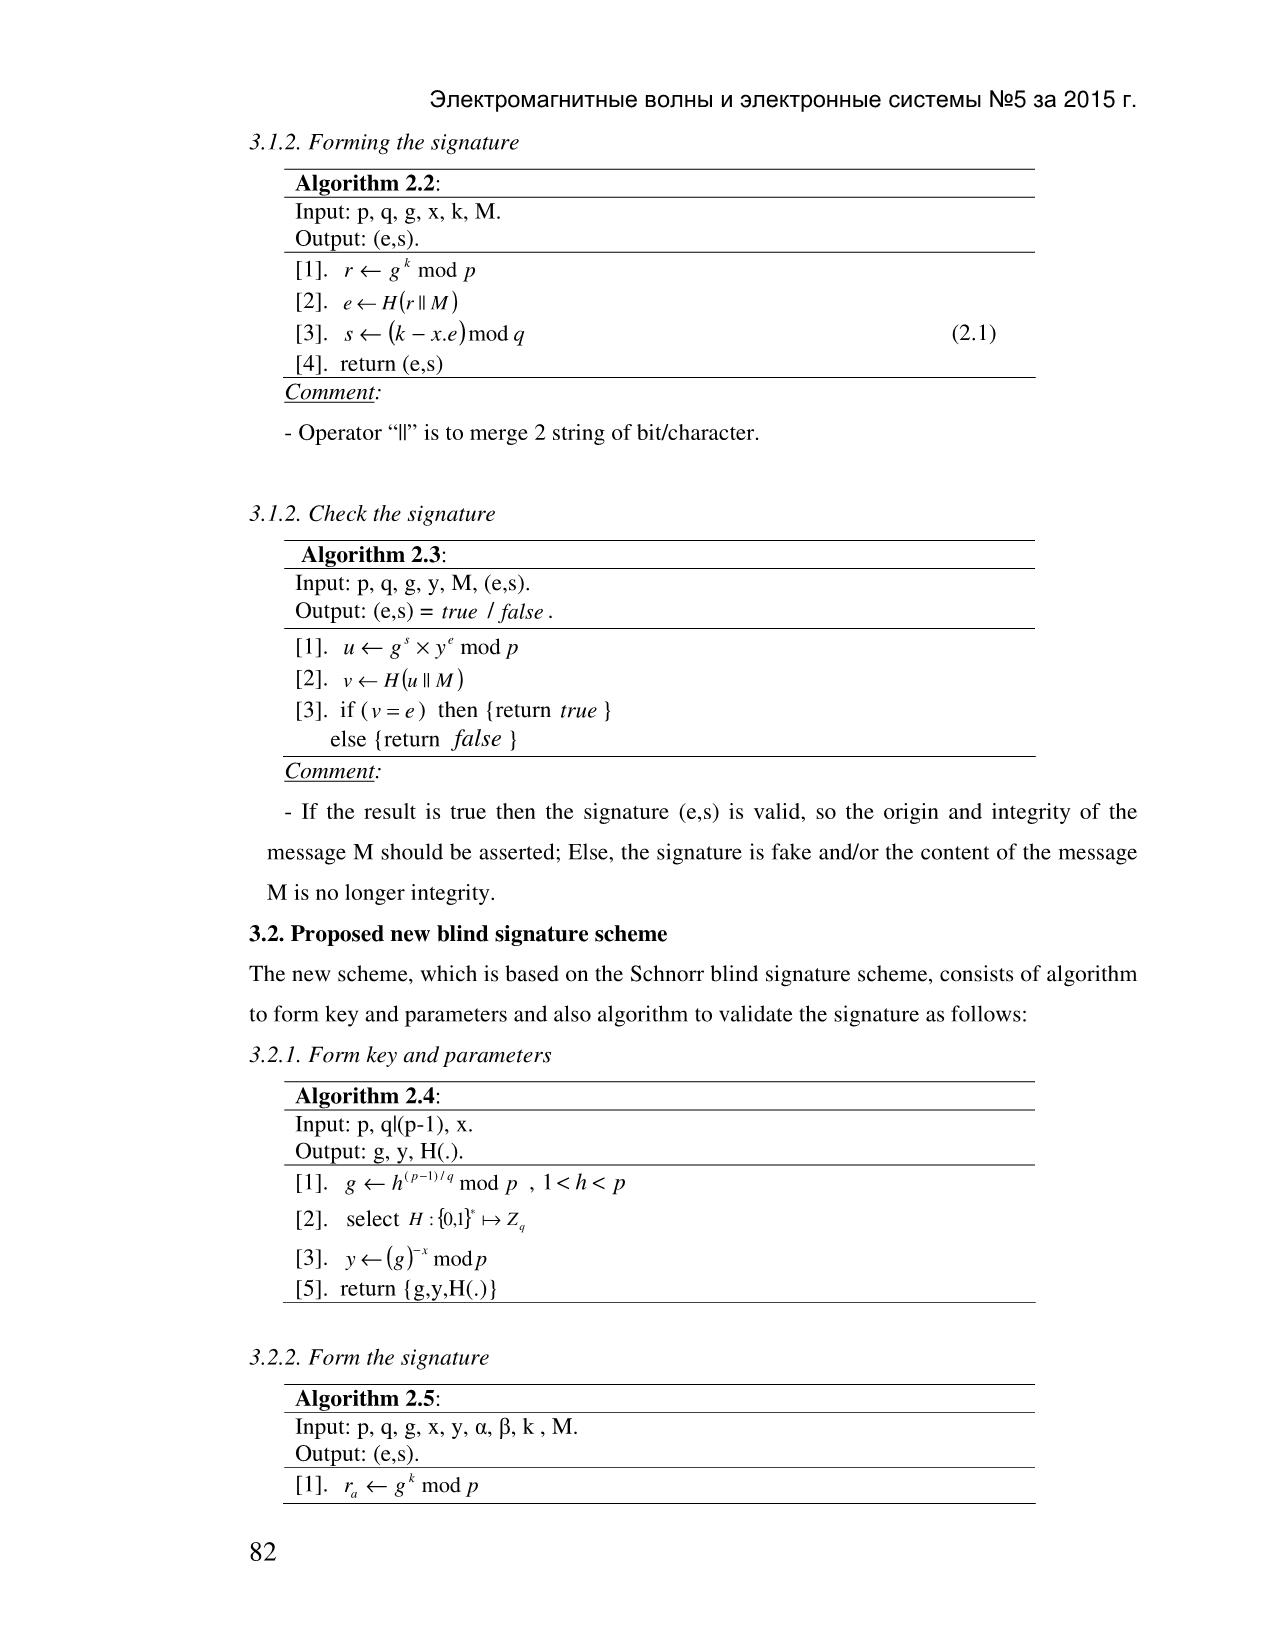 Blind signature scheme based on discrete logarithm problem trang 7